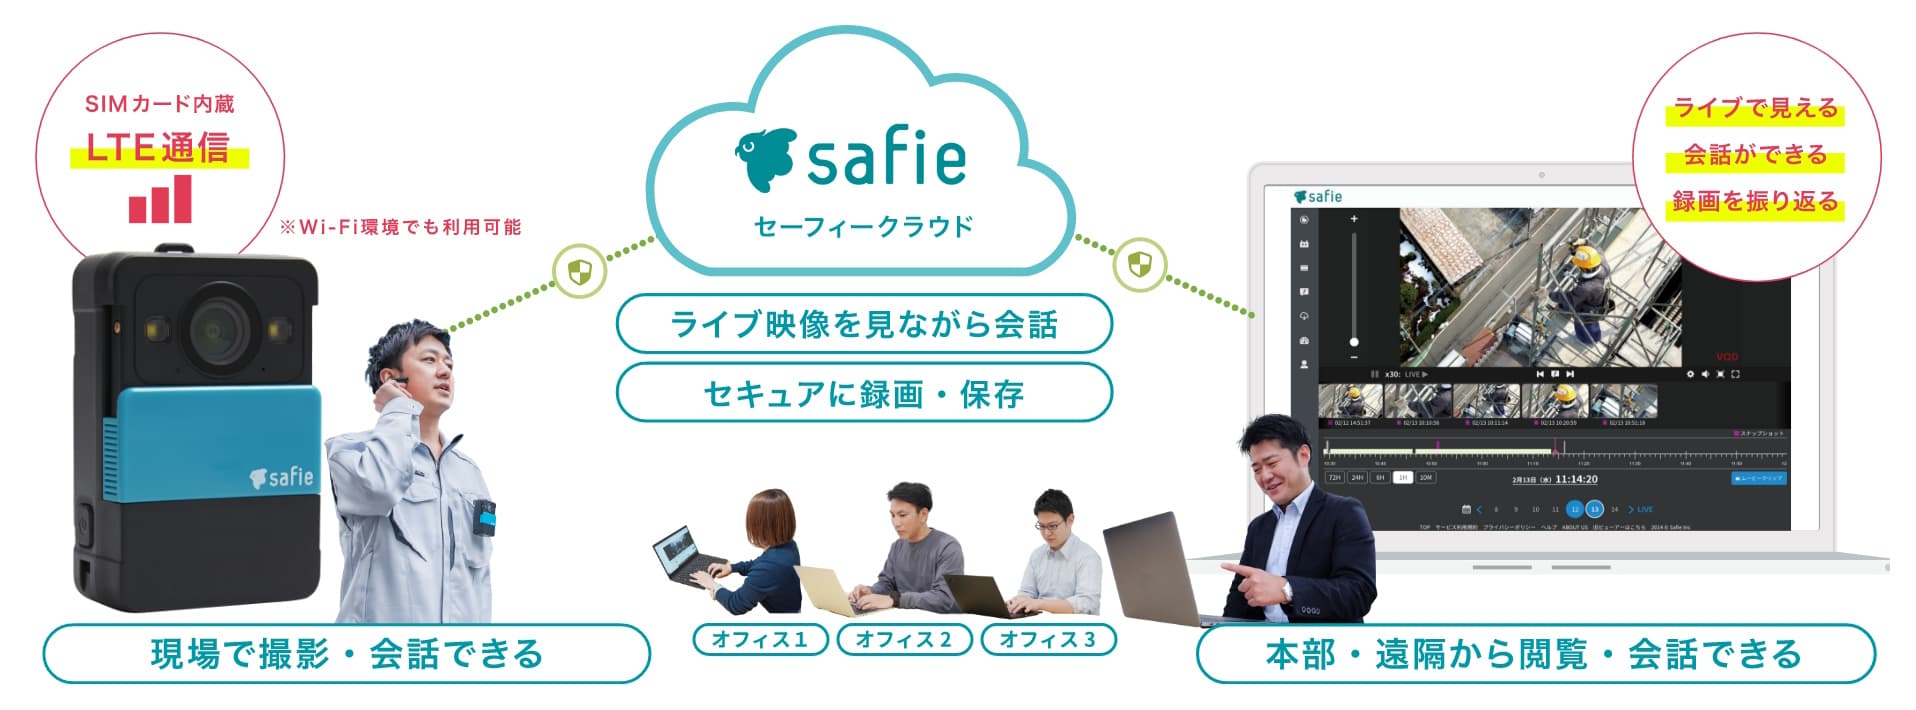 Safie Pocket2 通信の仕組み